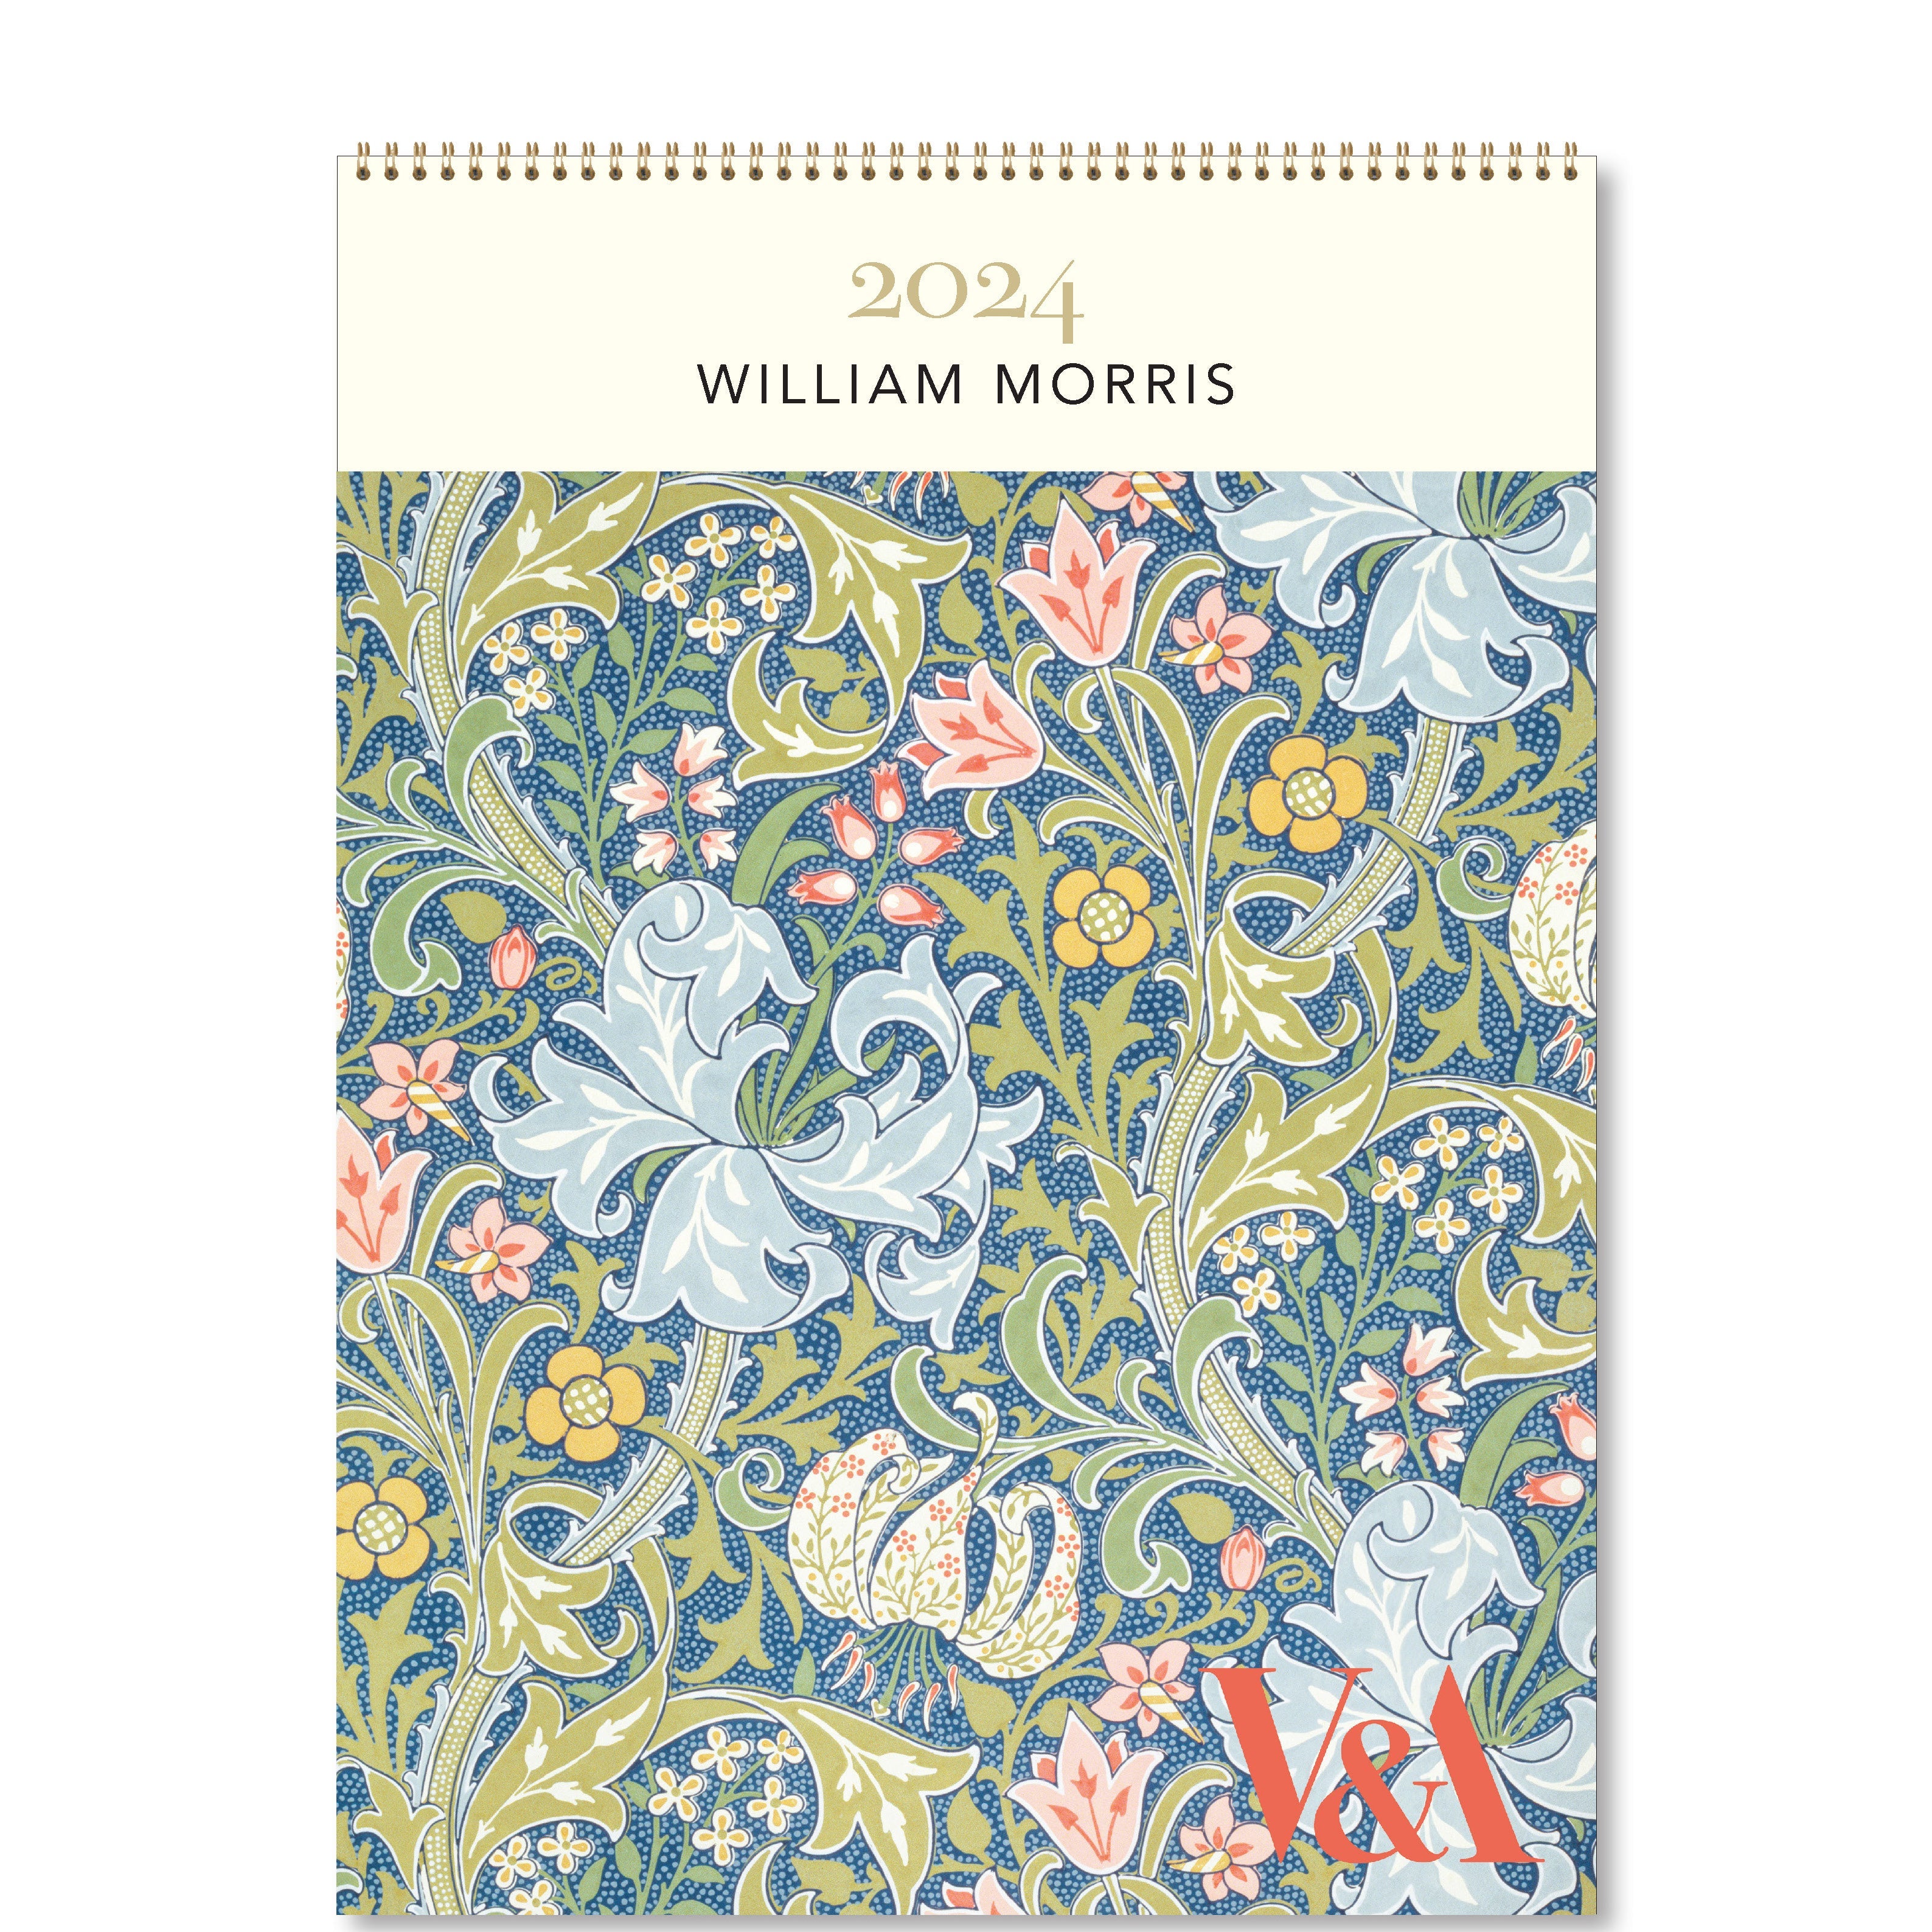 2024 William Morris - Deluxe Wall Calendar